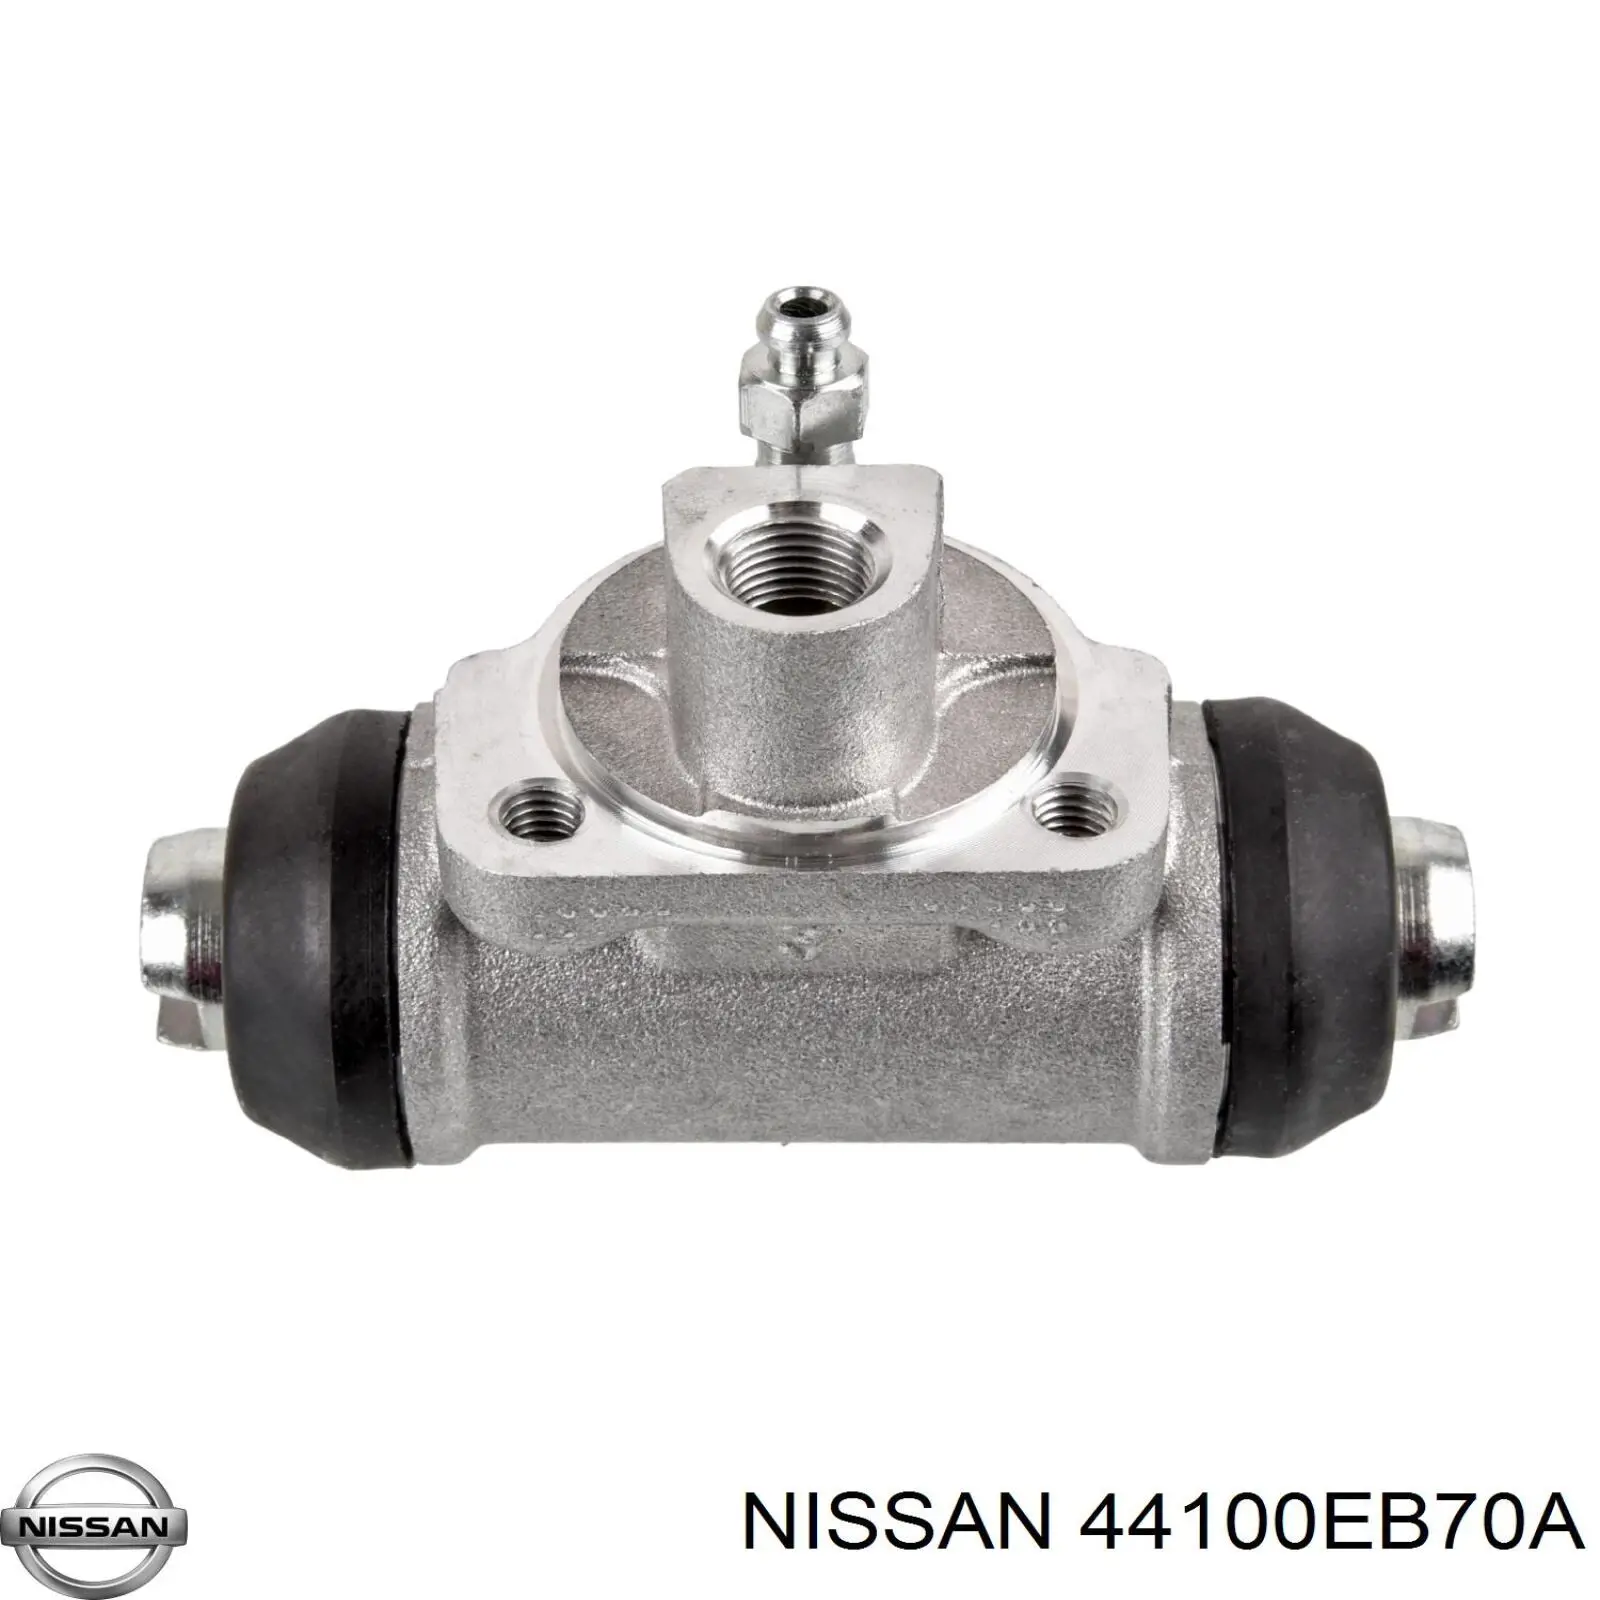 44100EB70A Nissan цилиндр тормозной колесный рабочий задний